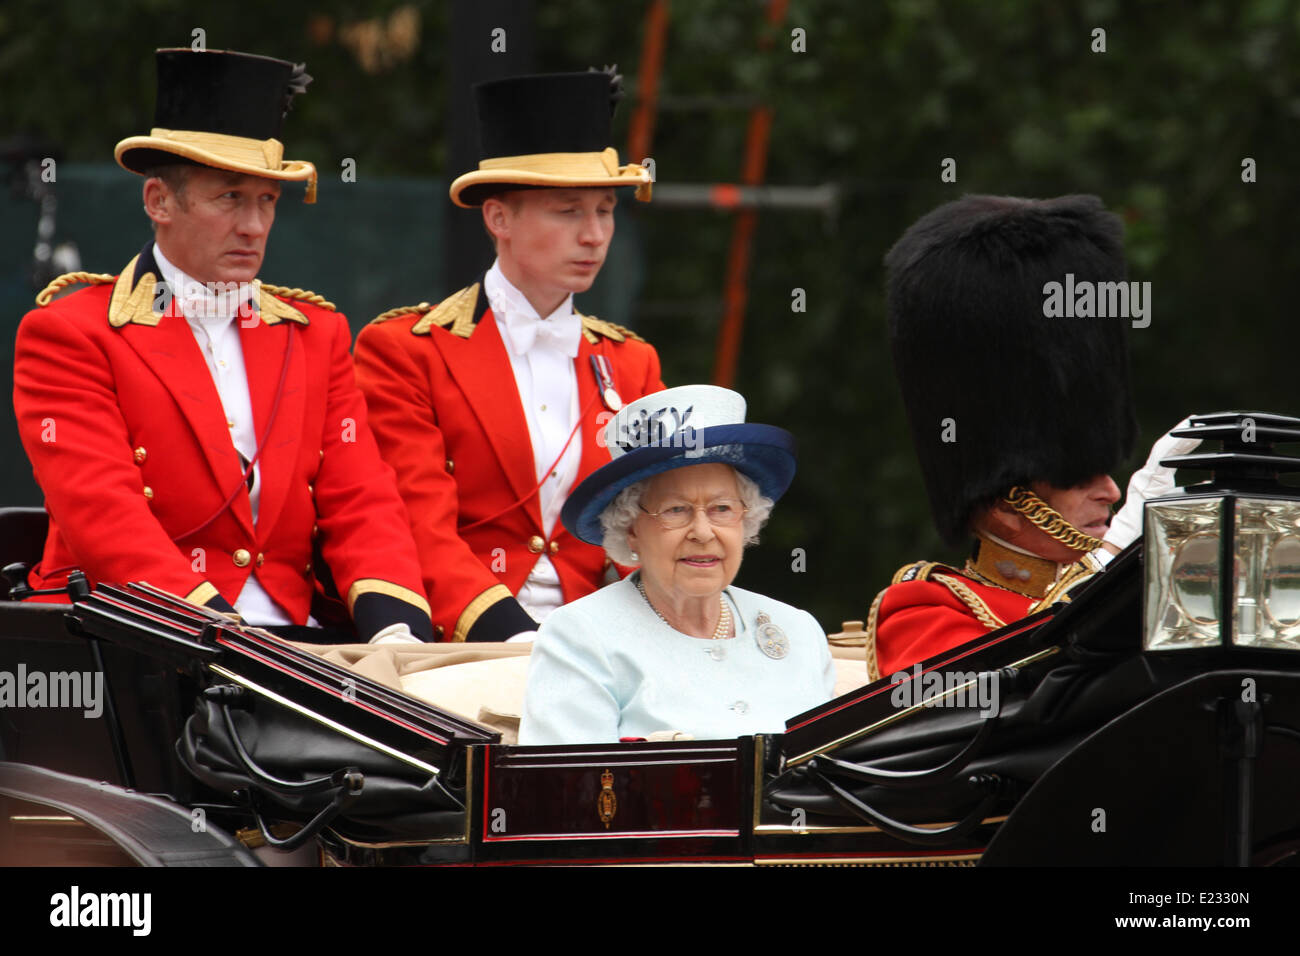 London, UK. 14th June 2014. HR Queen Elizabeth with Prince Phillip Duke of Edinburgh seen on horse-drawn carriages Credit:  David mbiyu/Alamy Live News Stock Photo